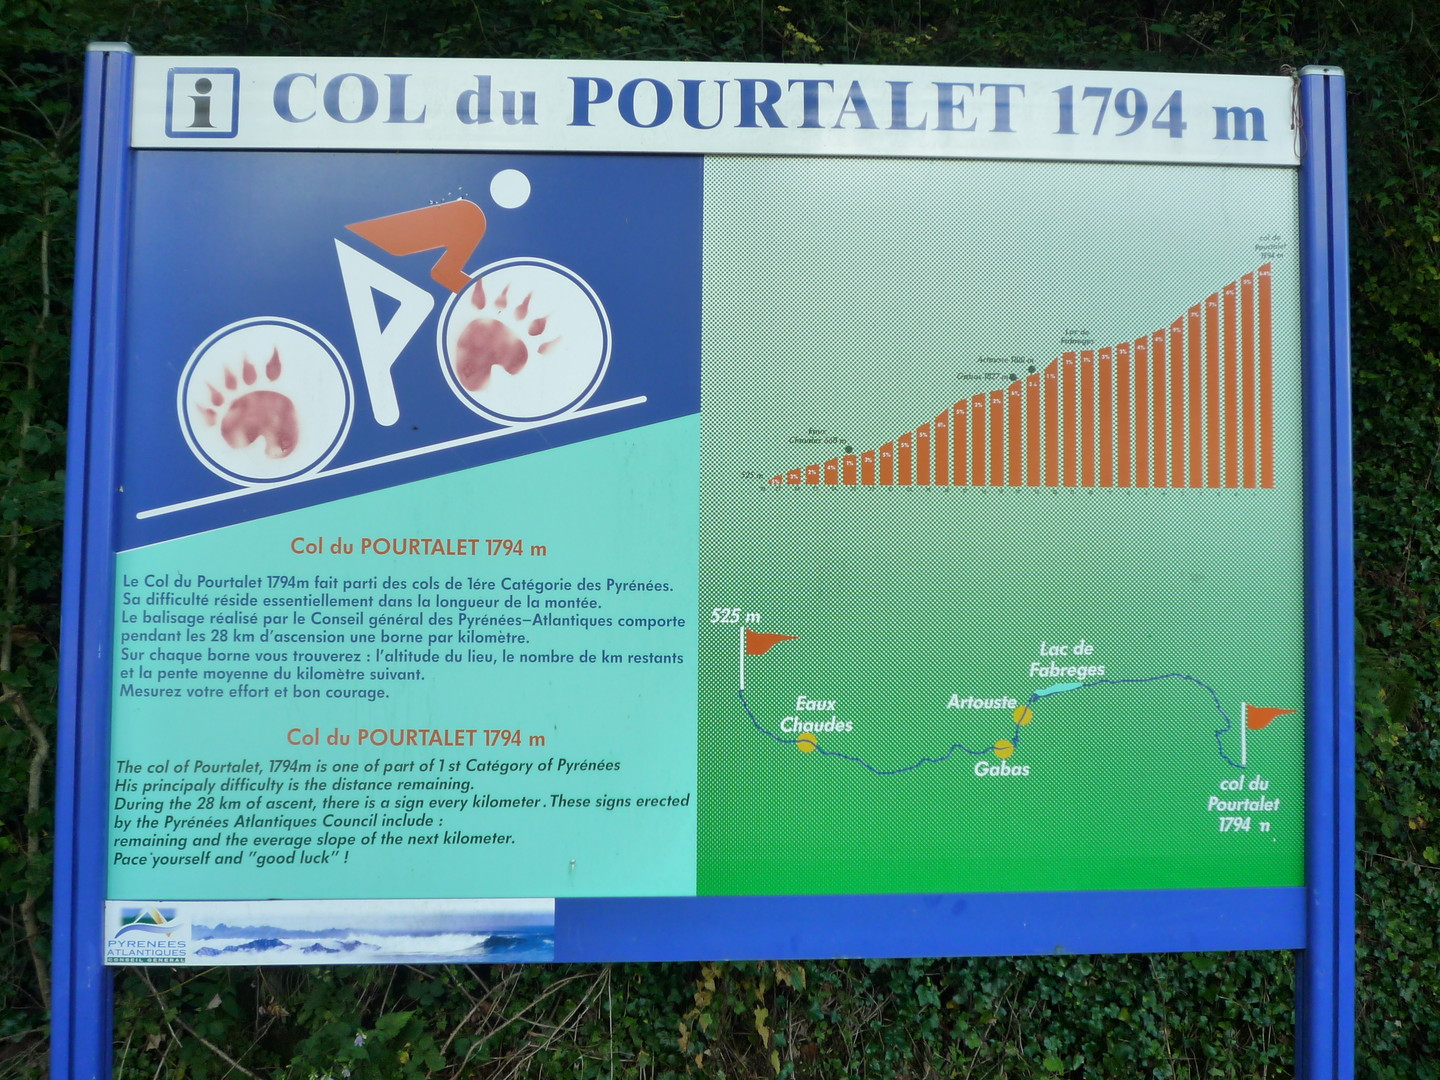 Info Tabelle : Col du Pourtalet